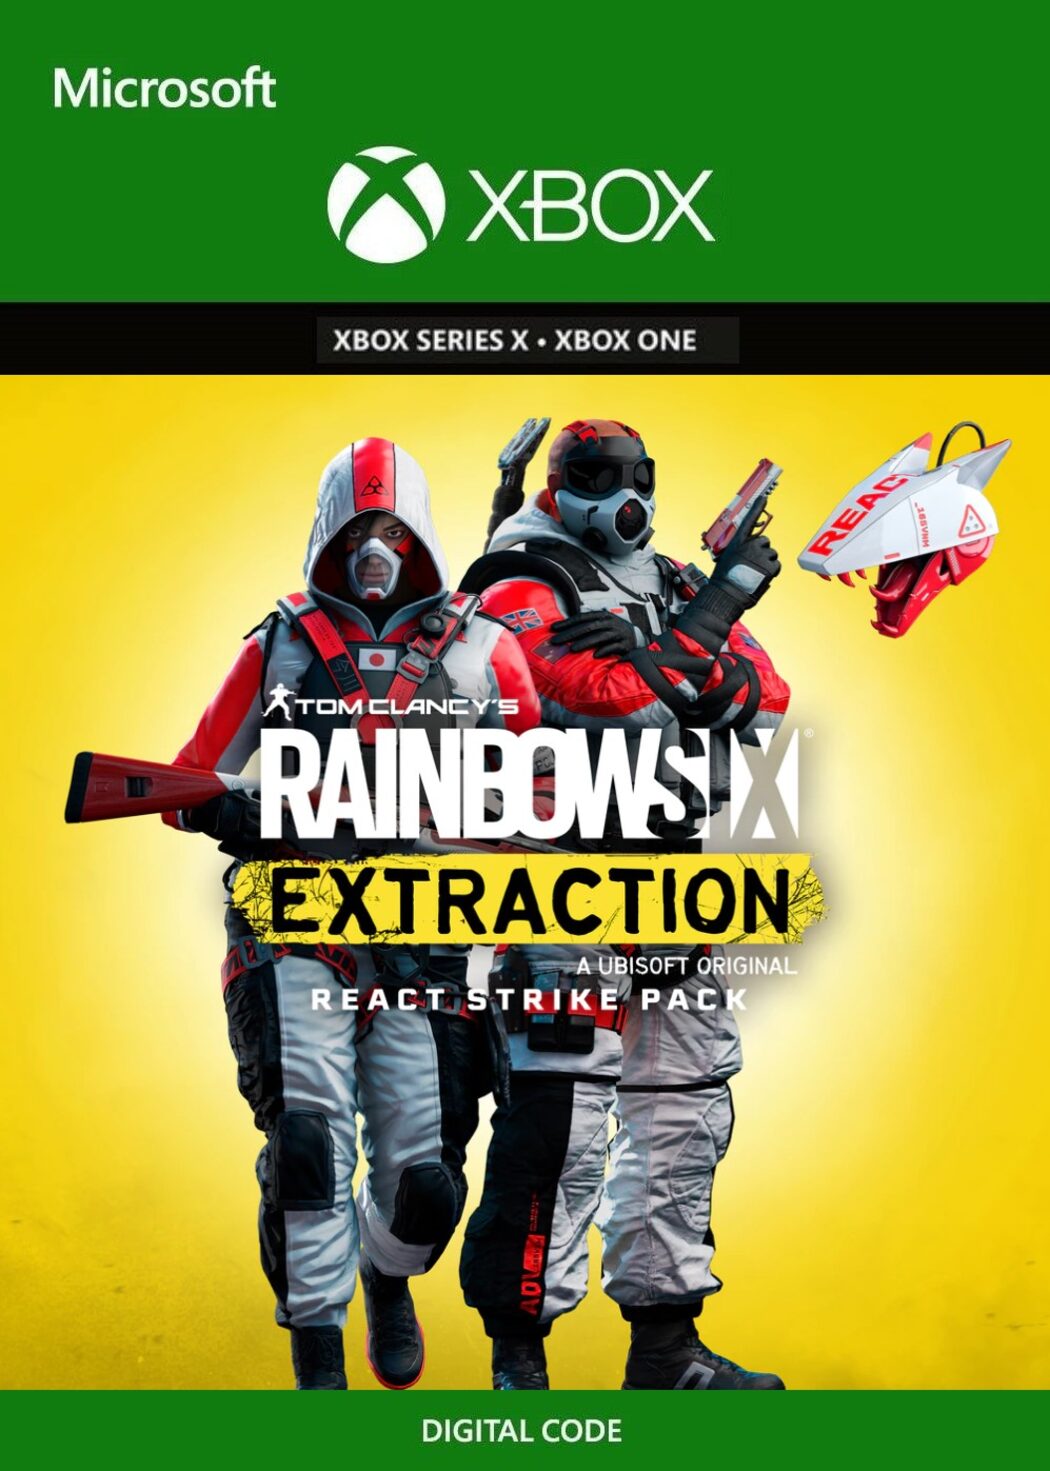 Buy Tom Clancy\'s Rainbow | Six Pack (DLC) REACT - Cheap ENEBA Xbox Strike price key! Extraction